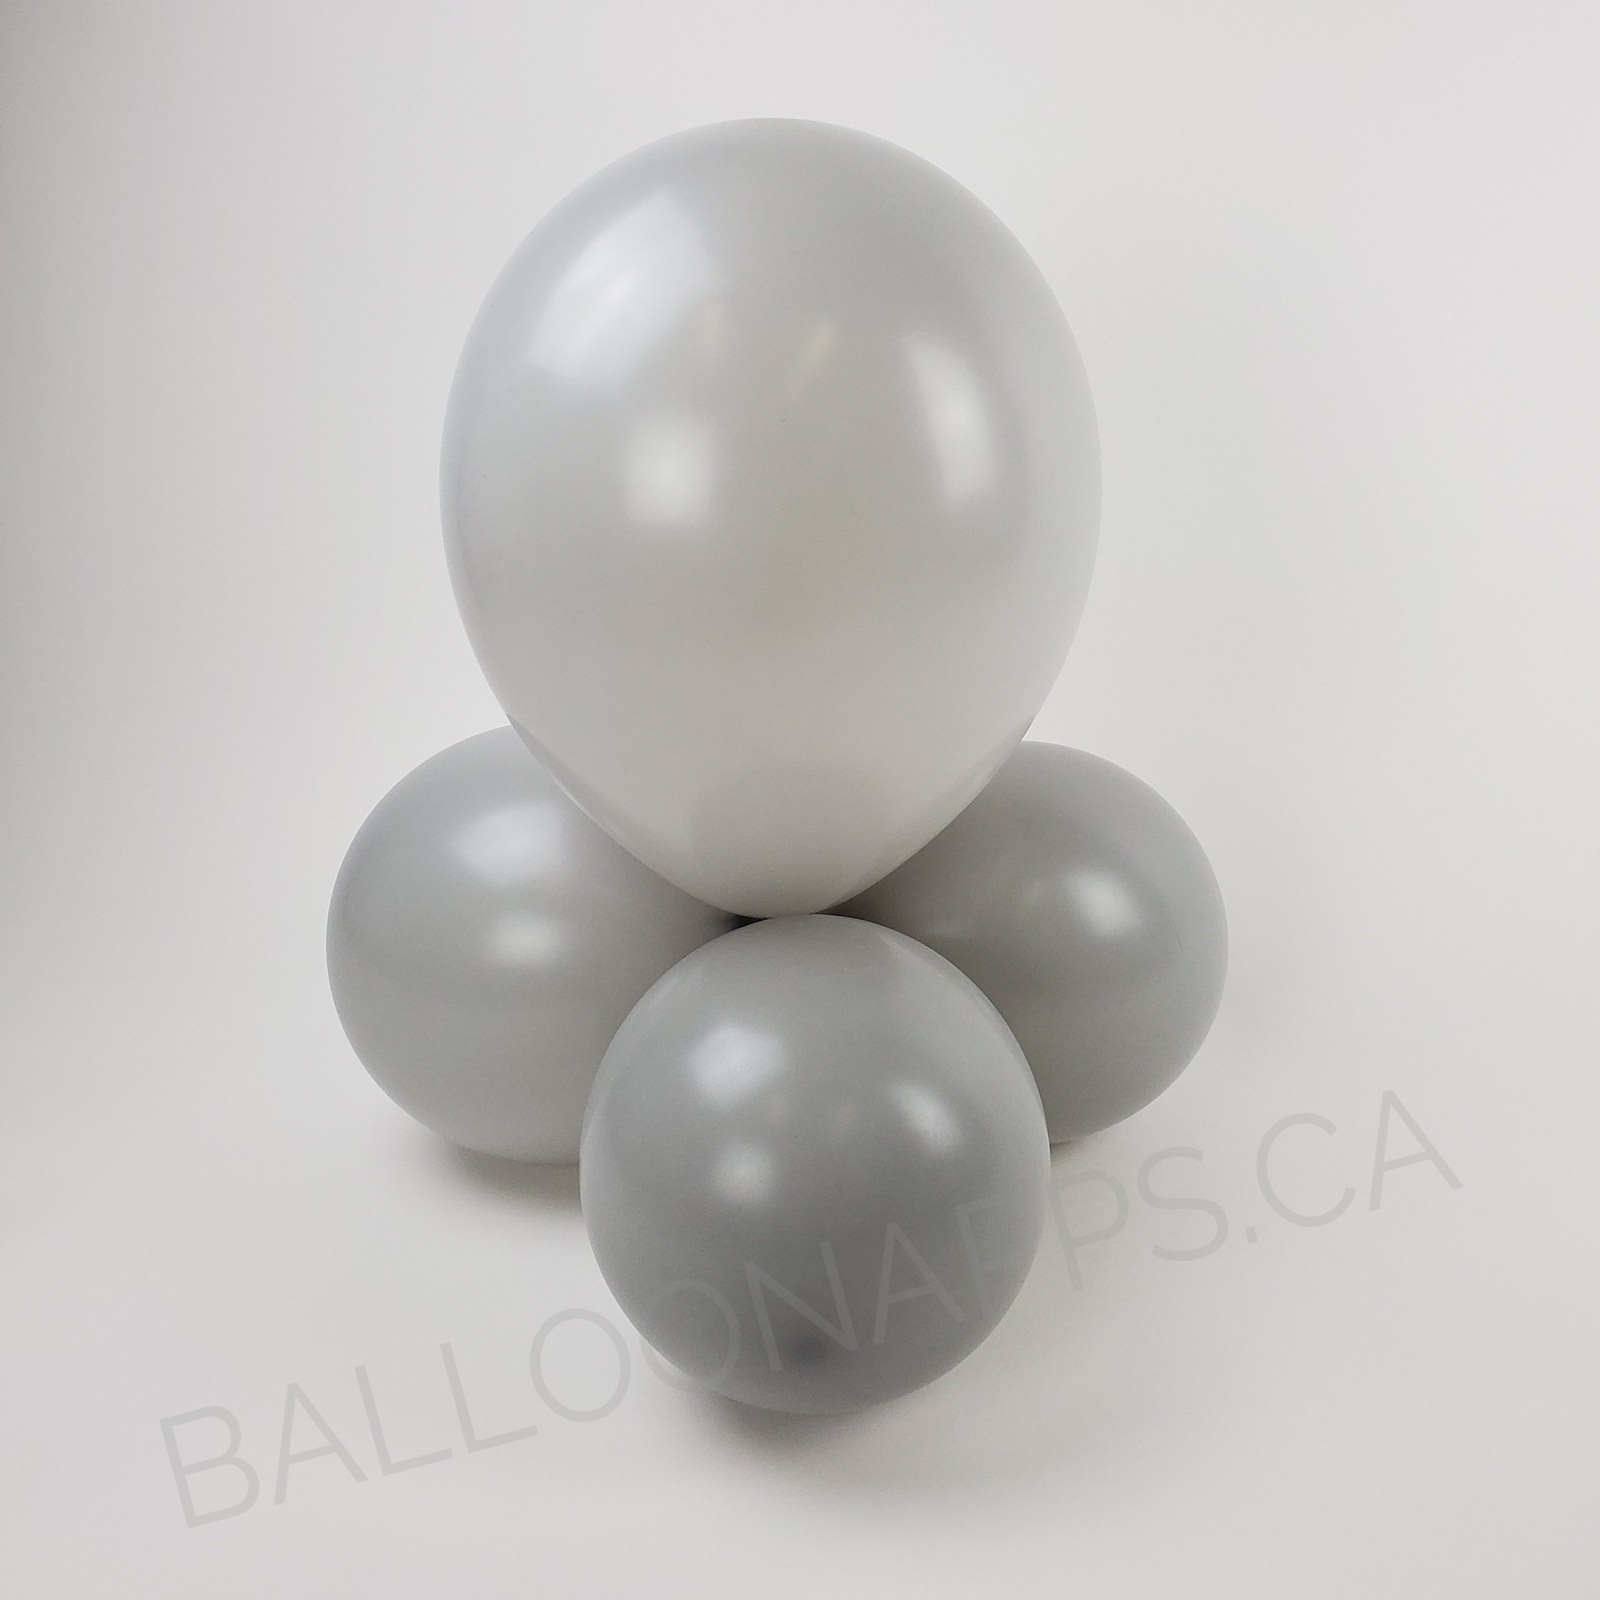 balloon texture BET (50) 260 Deluxe Grey balloons